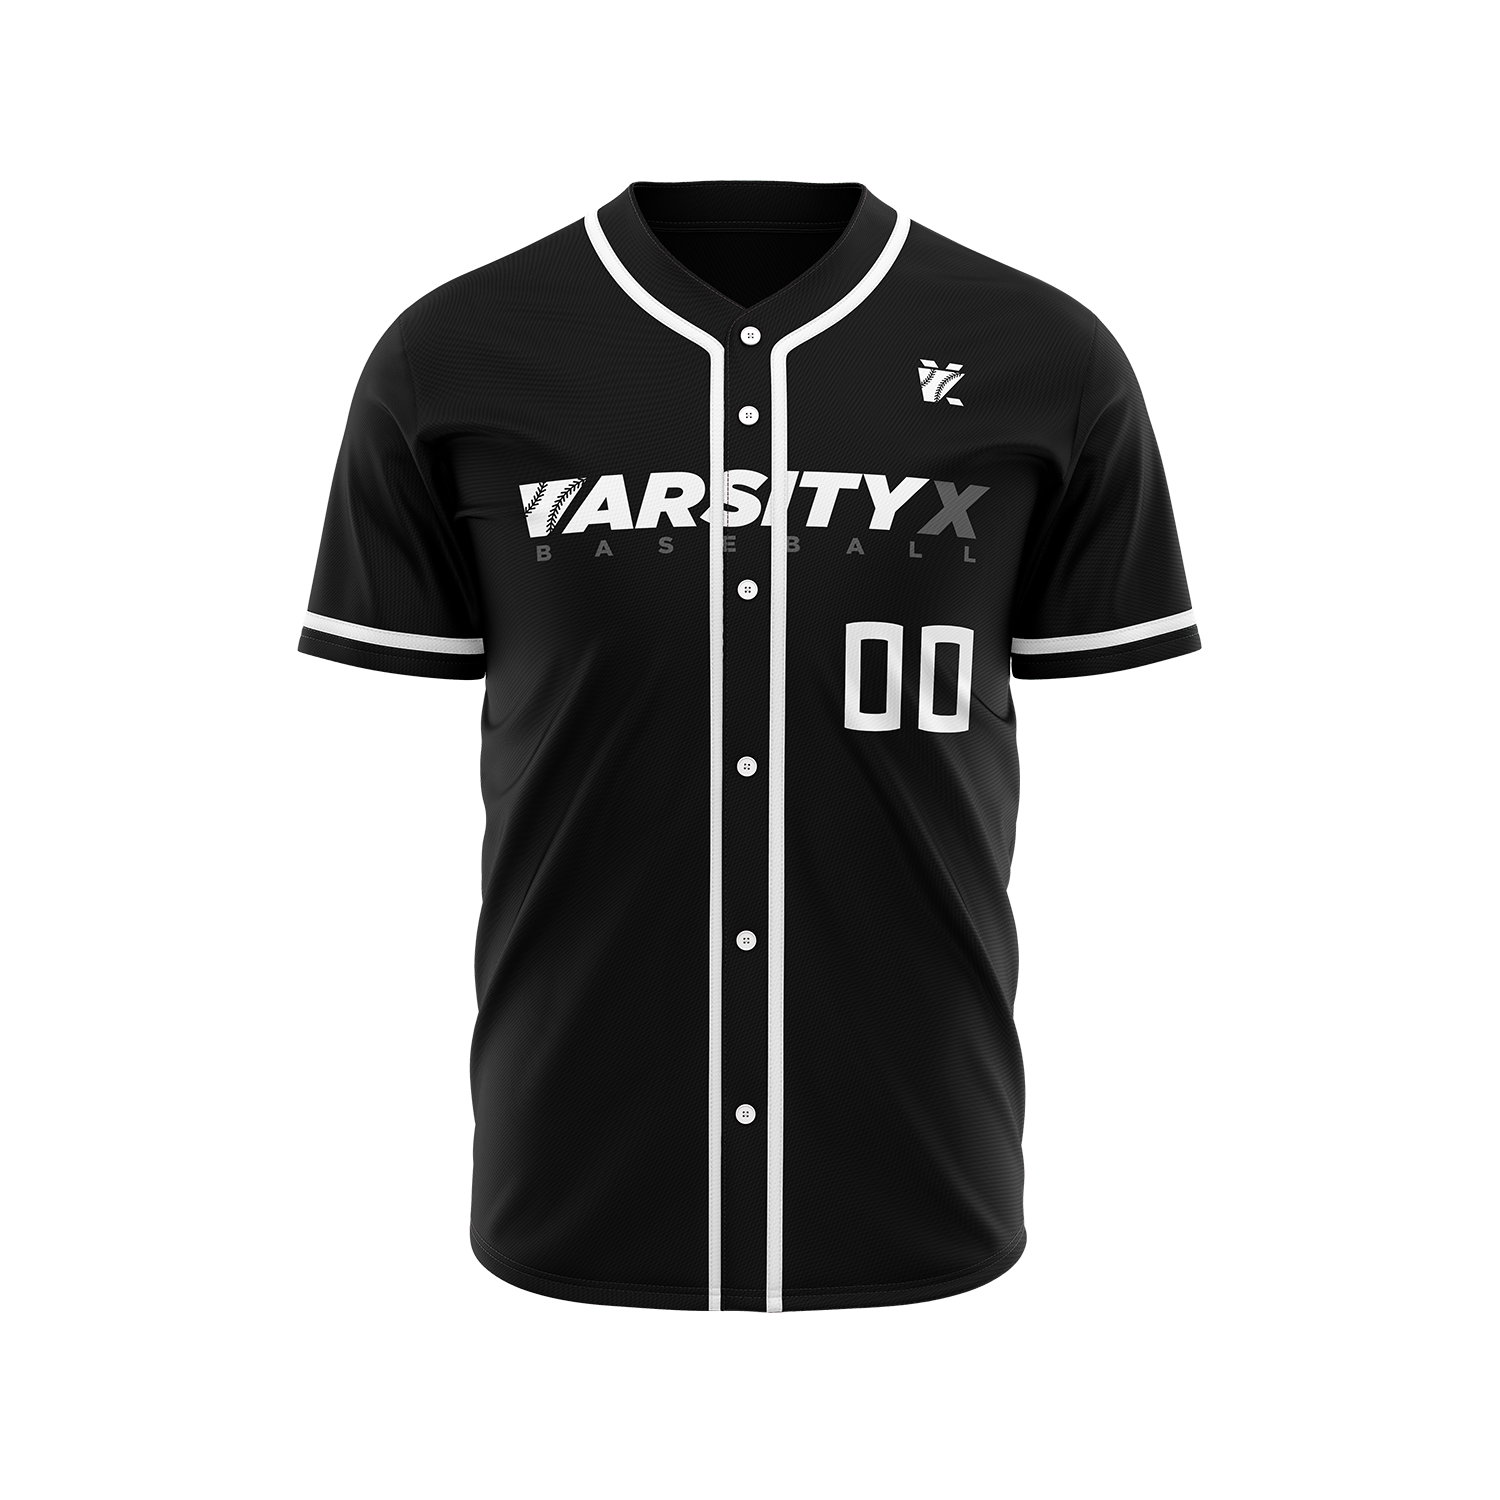 Varsity X Baseball Jersey 2 copy.png__PID:2ae2b71d-6bc3-4633-8b04-d86334df5ead